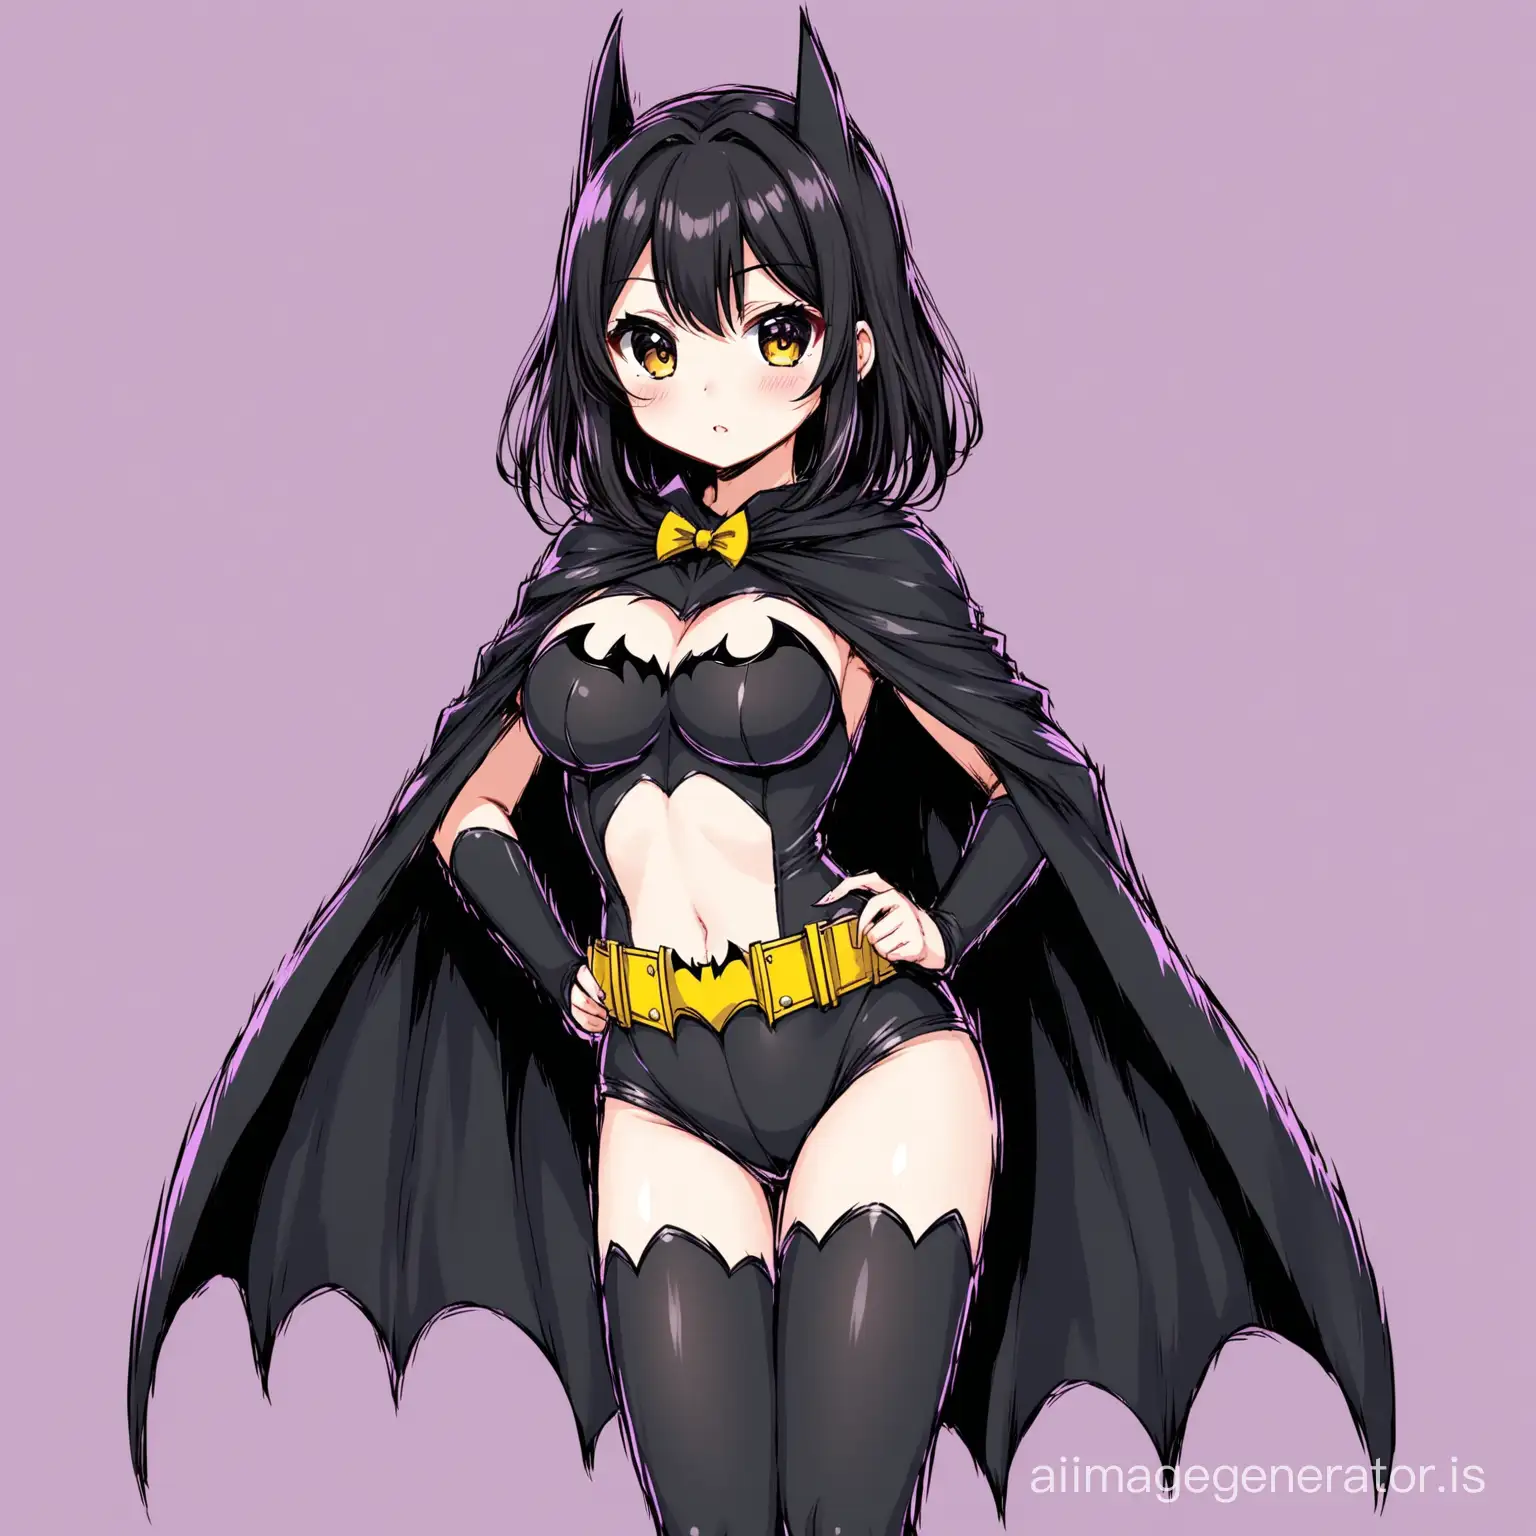 hot anime girl in batman kawaii costume wearing a cape